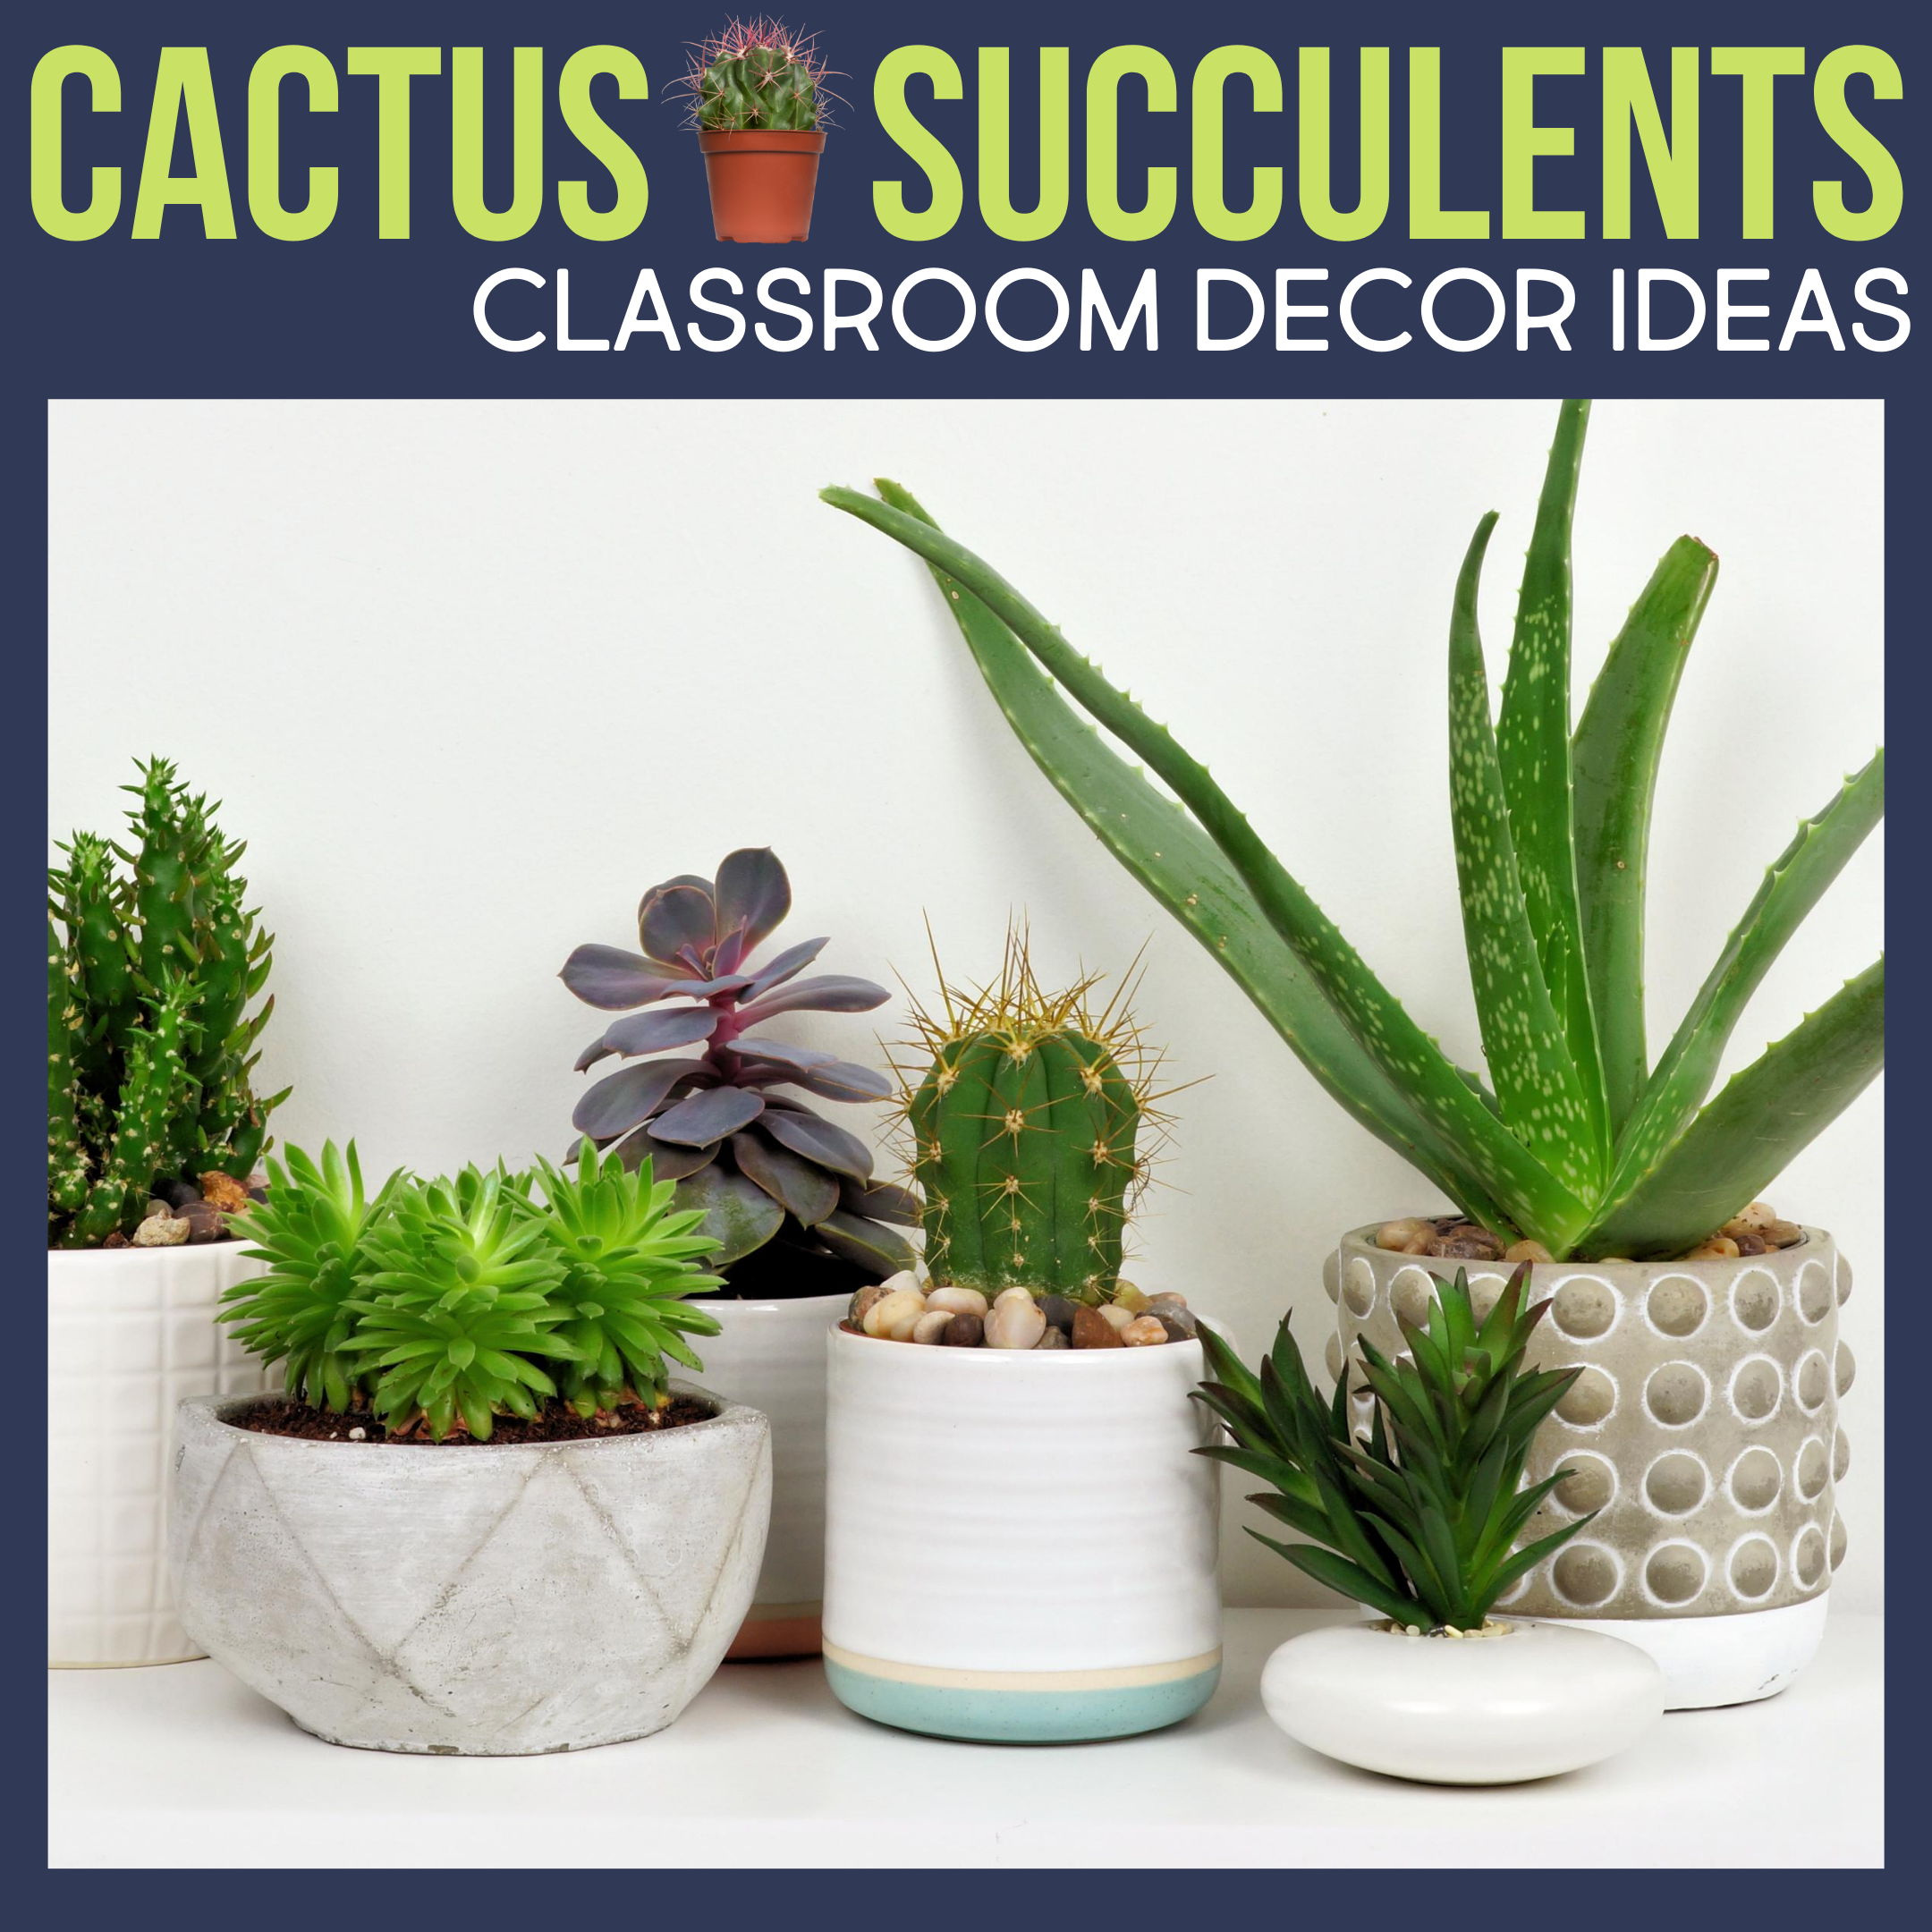 Classroom Decor Llamas and Succulents, oh my! - Classroom Freebies